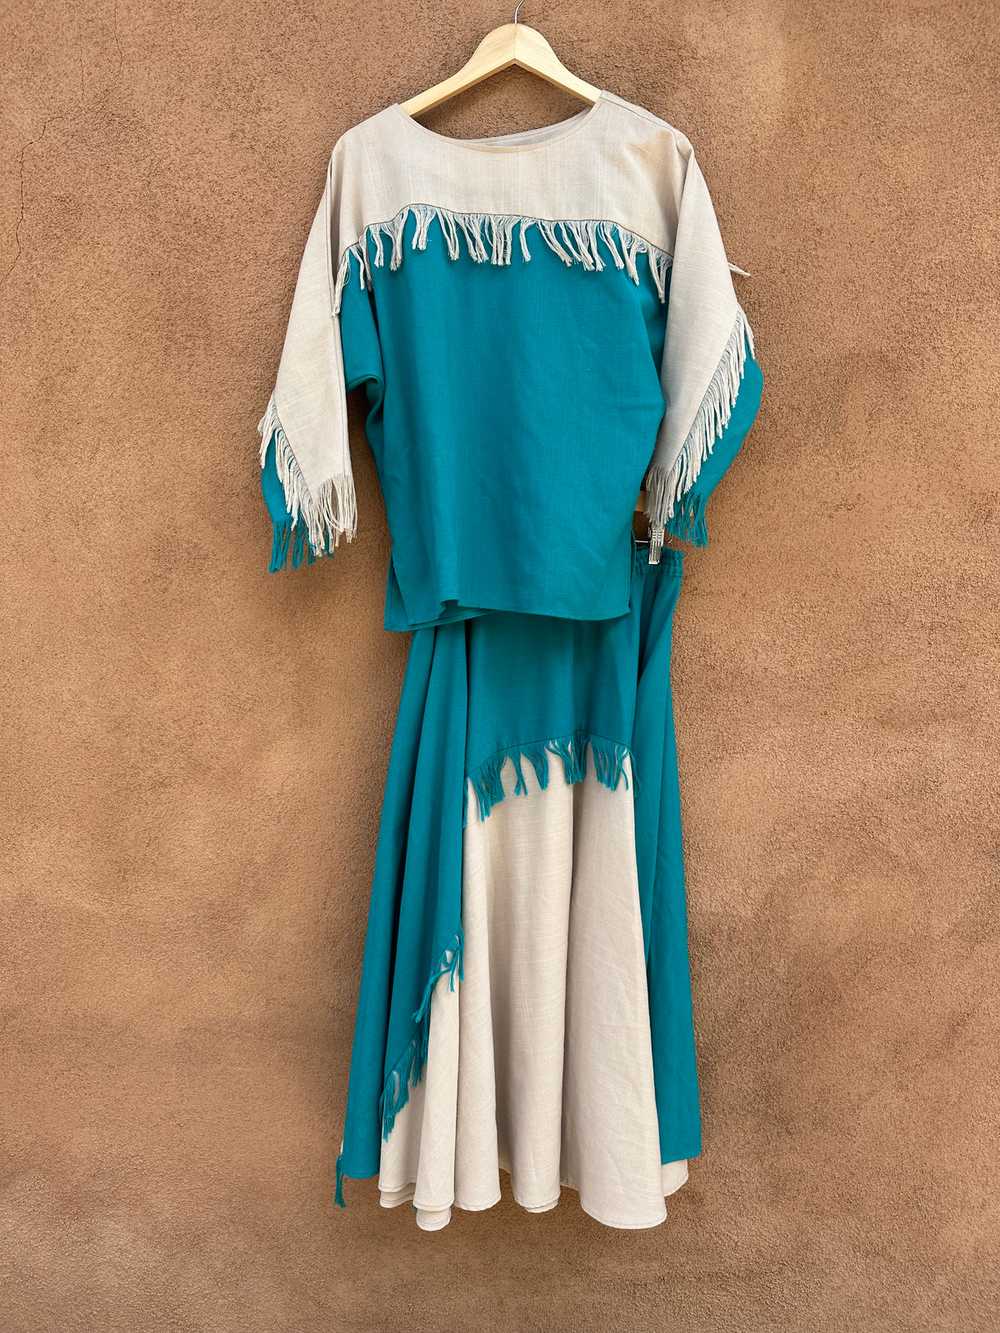 Sun Country Togs Southwestern Dress Set - image 2